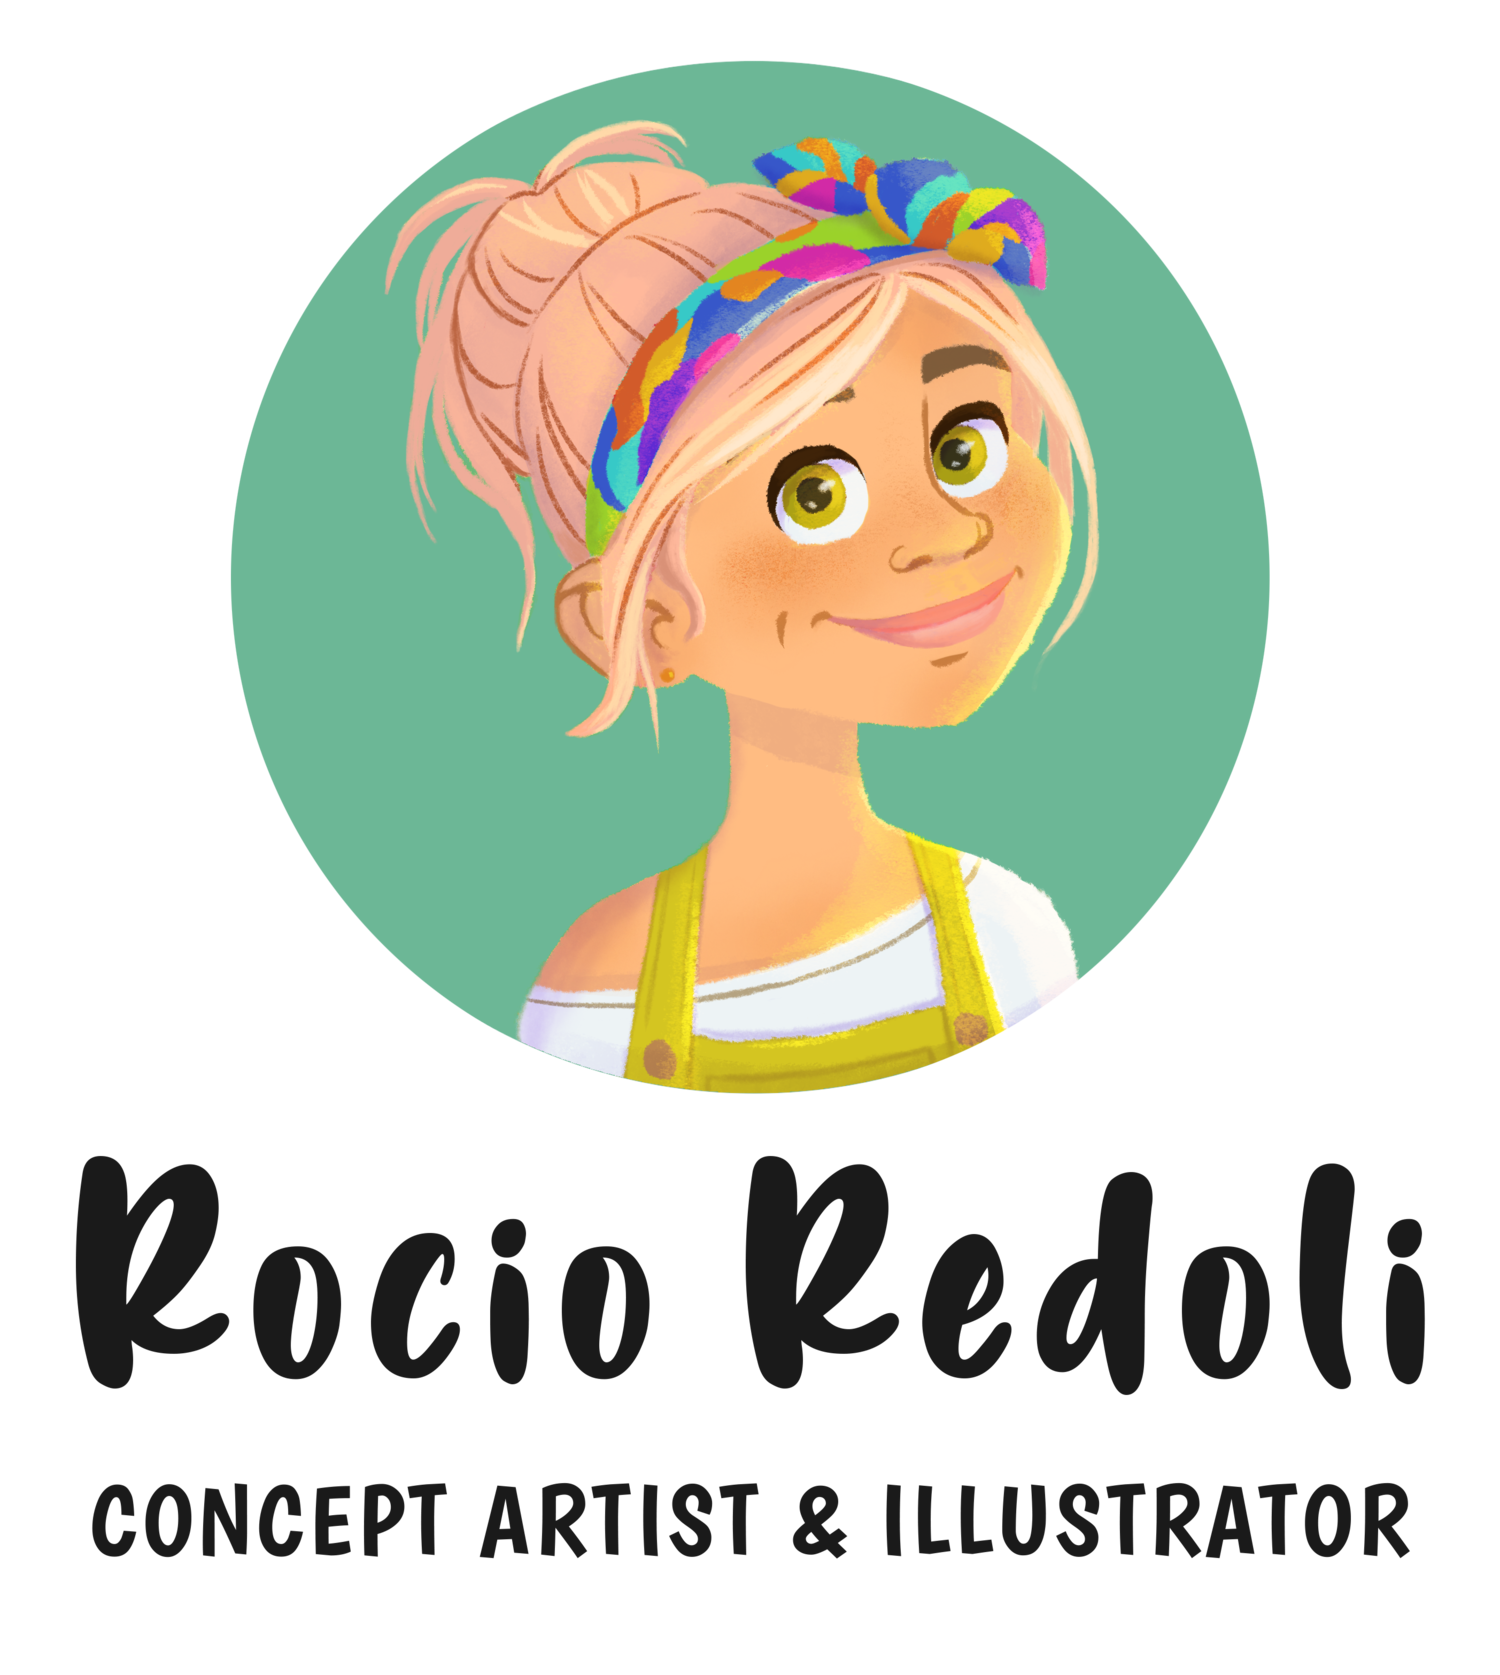 Profile Sketch Rocio Redoli Concept Artist Illustrator